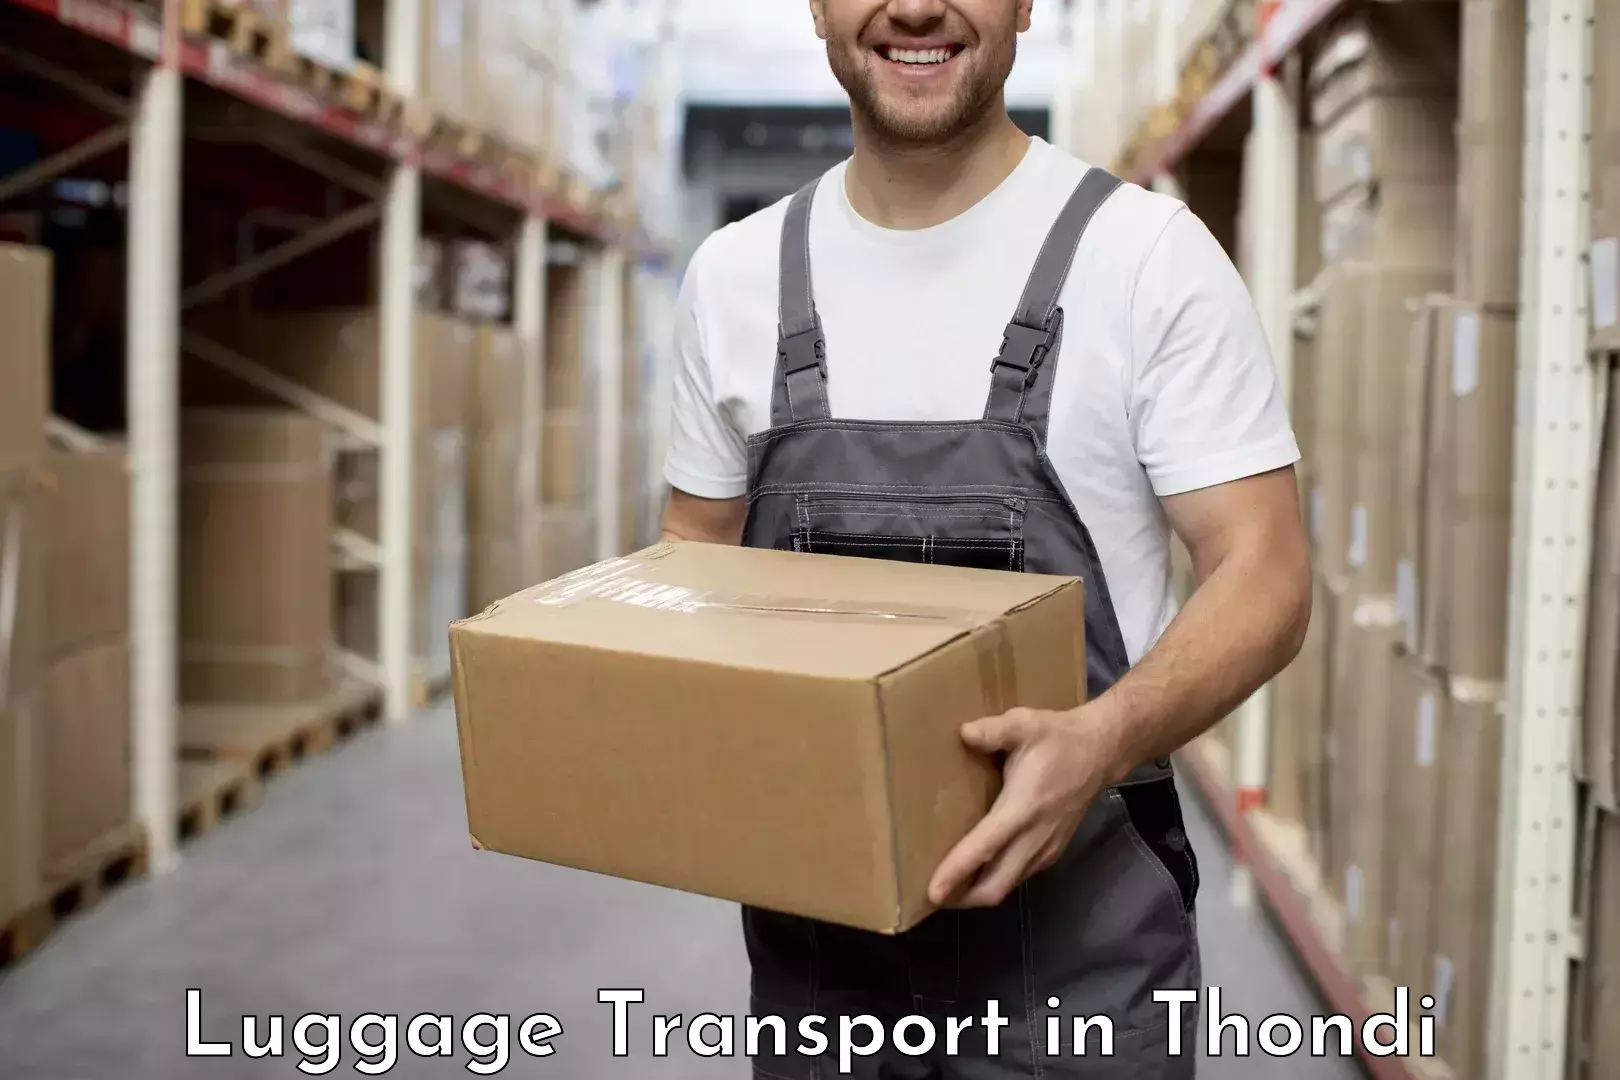 Baggage transport coordination in Thondi